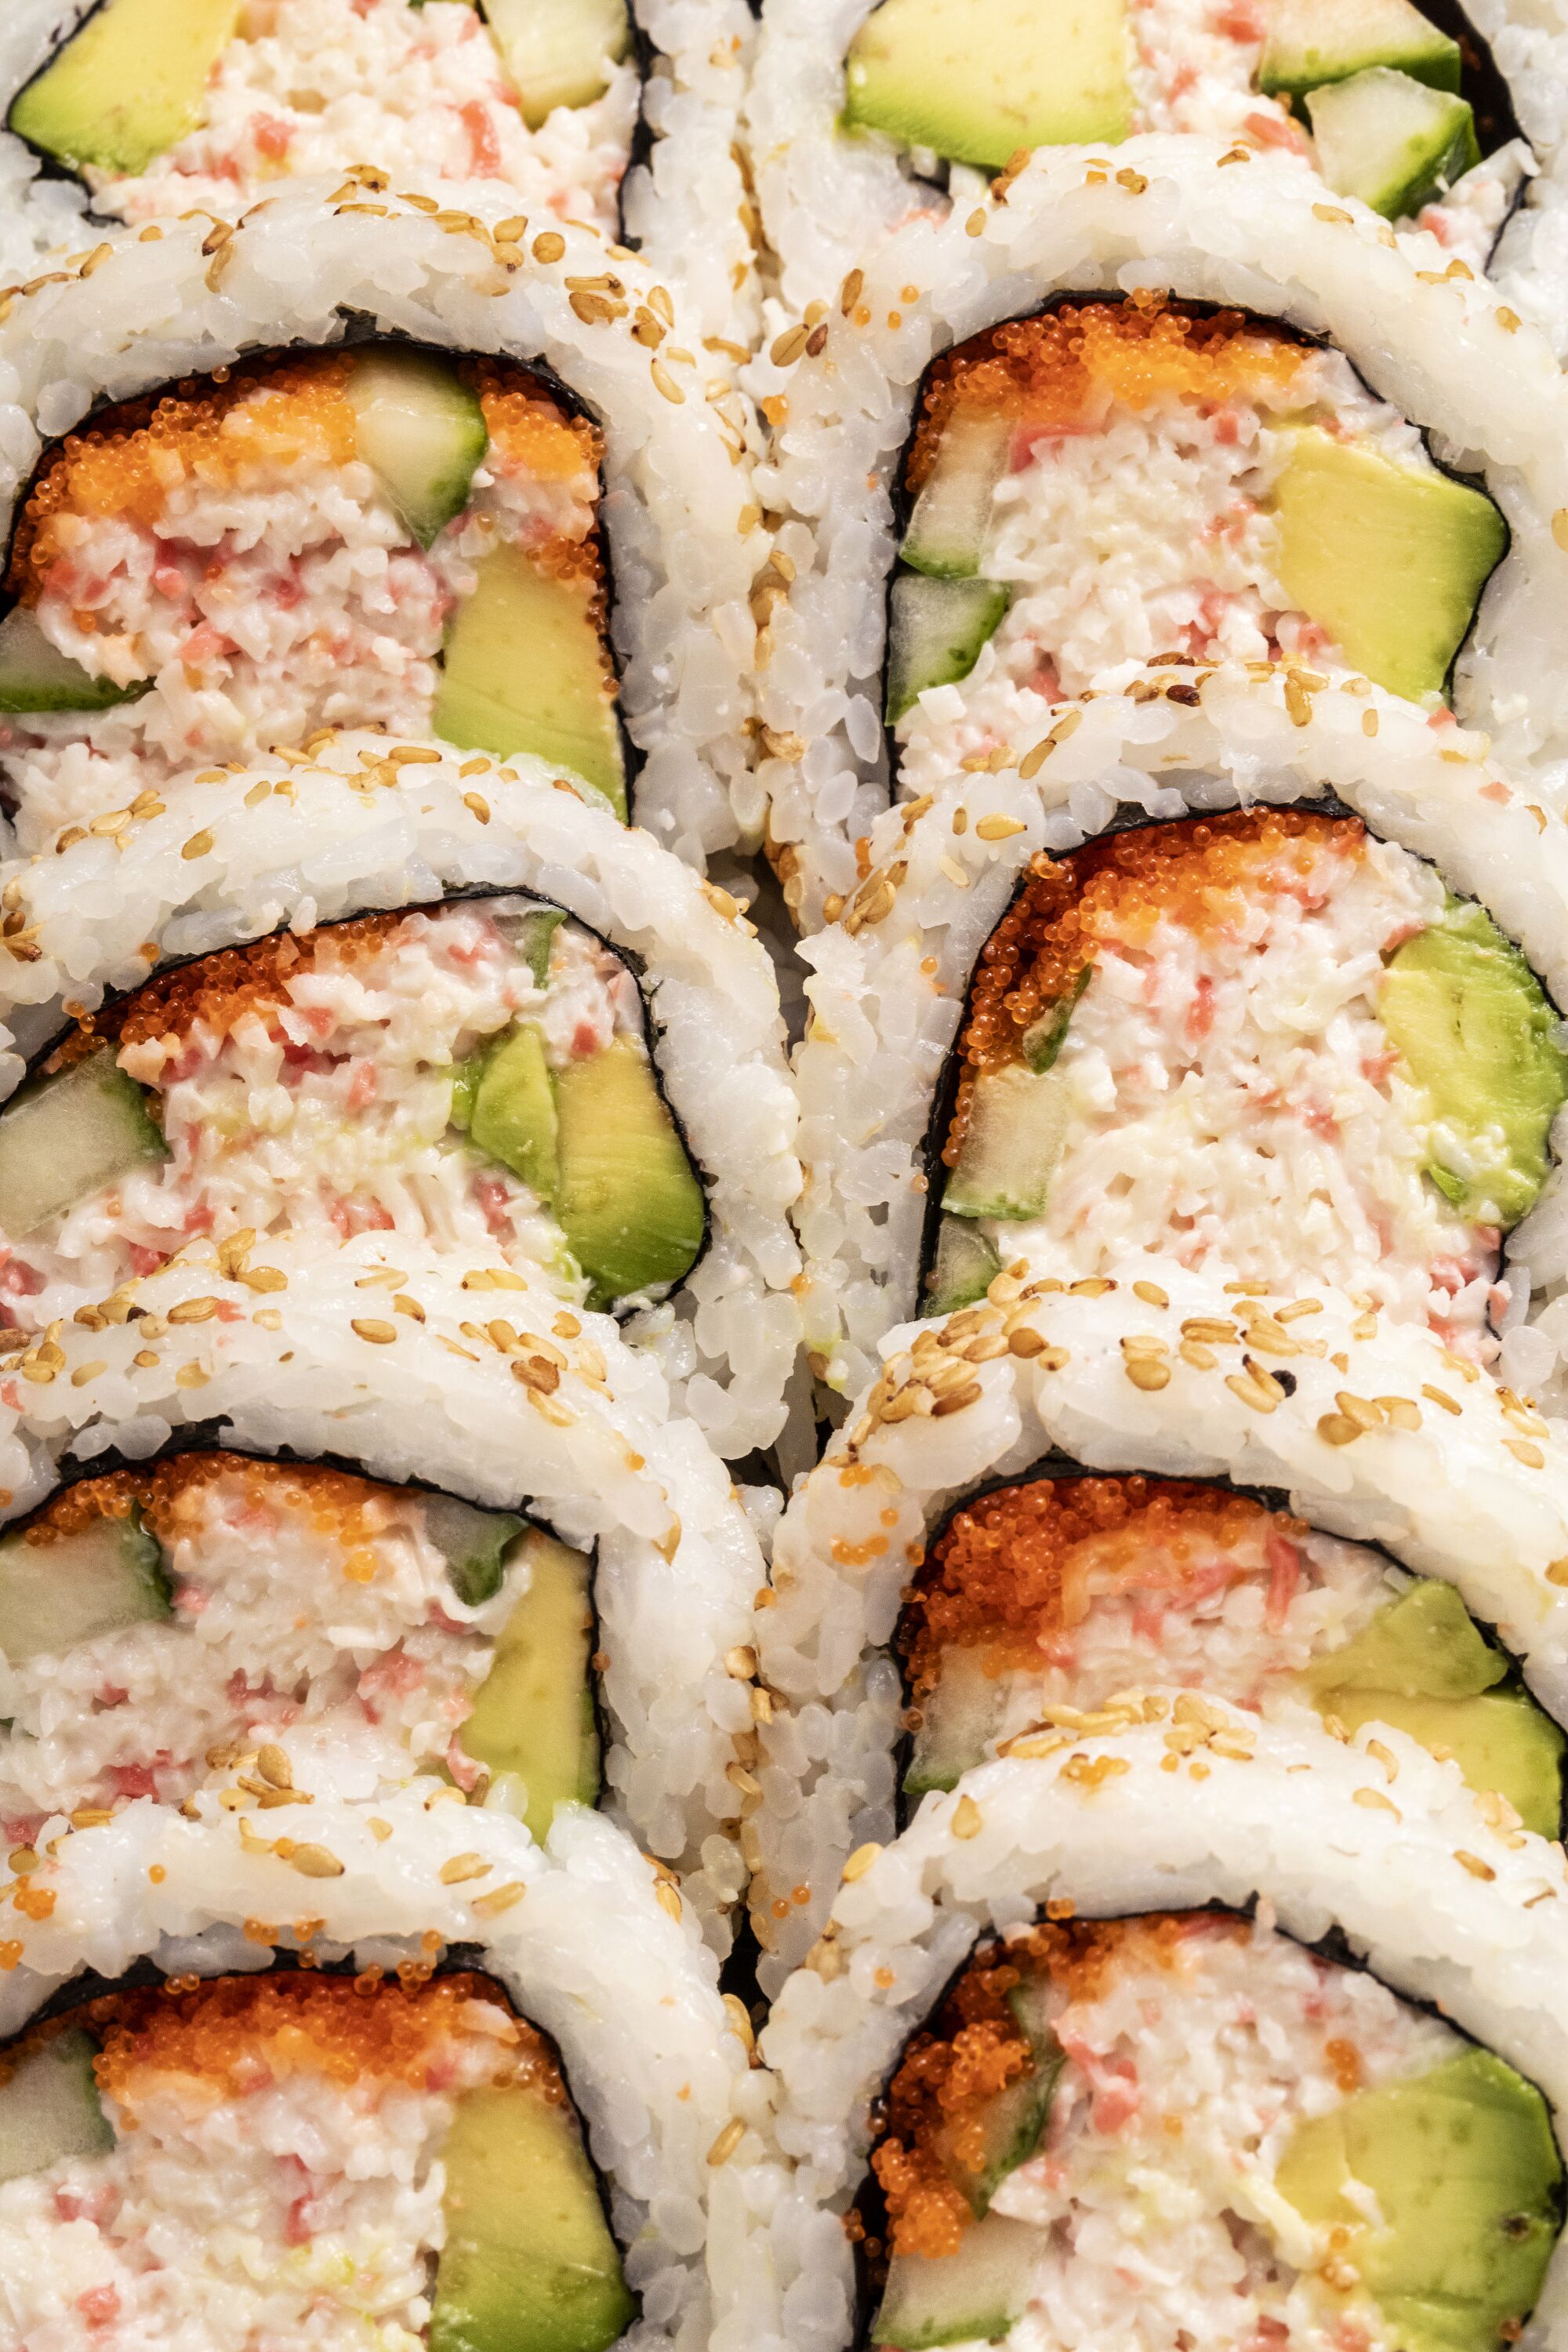 Yama Seafood founder Kenzo Yamada created the store's signature California roll.